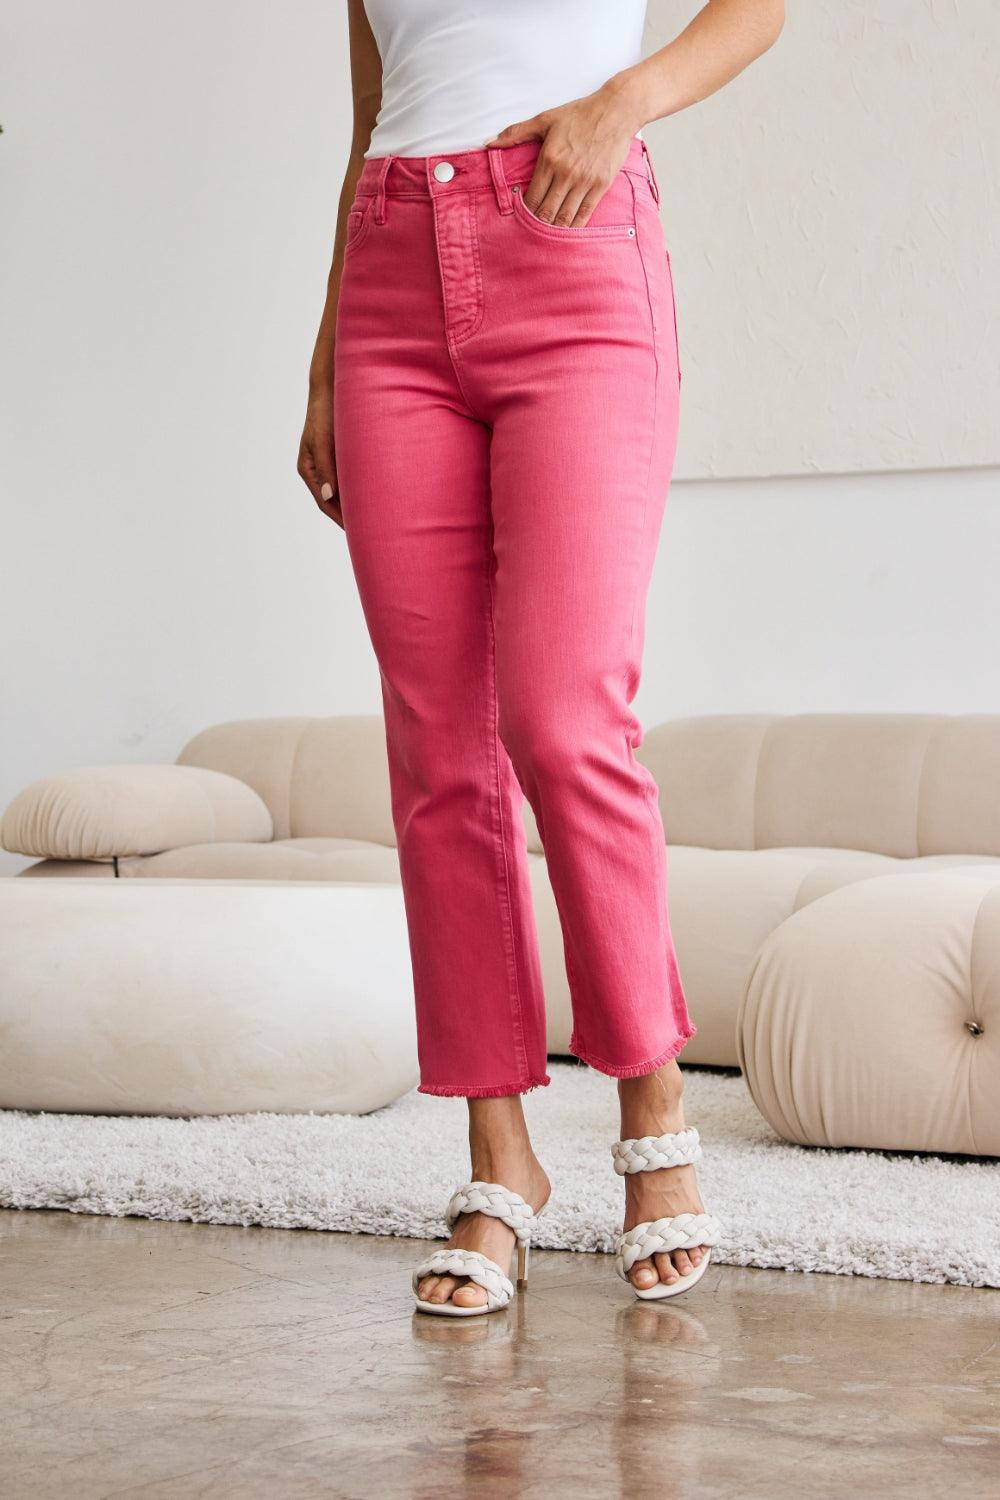 Women's Jeans RFM Crop Dylan Full Size Tummy Control High Waist Raw Hem Jeans